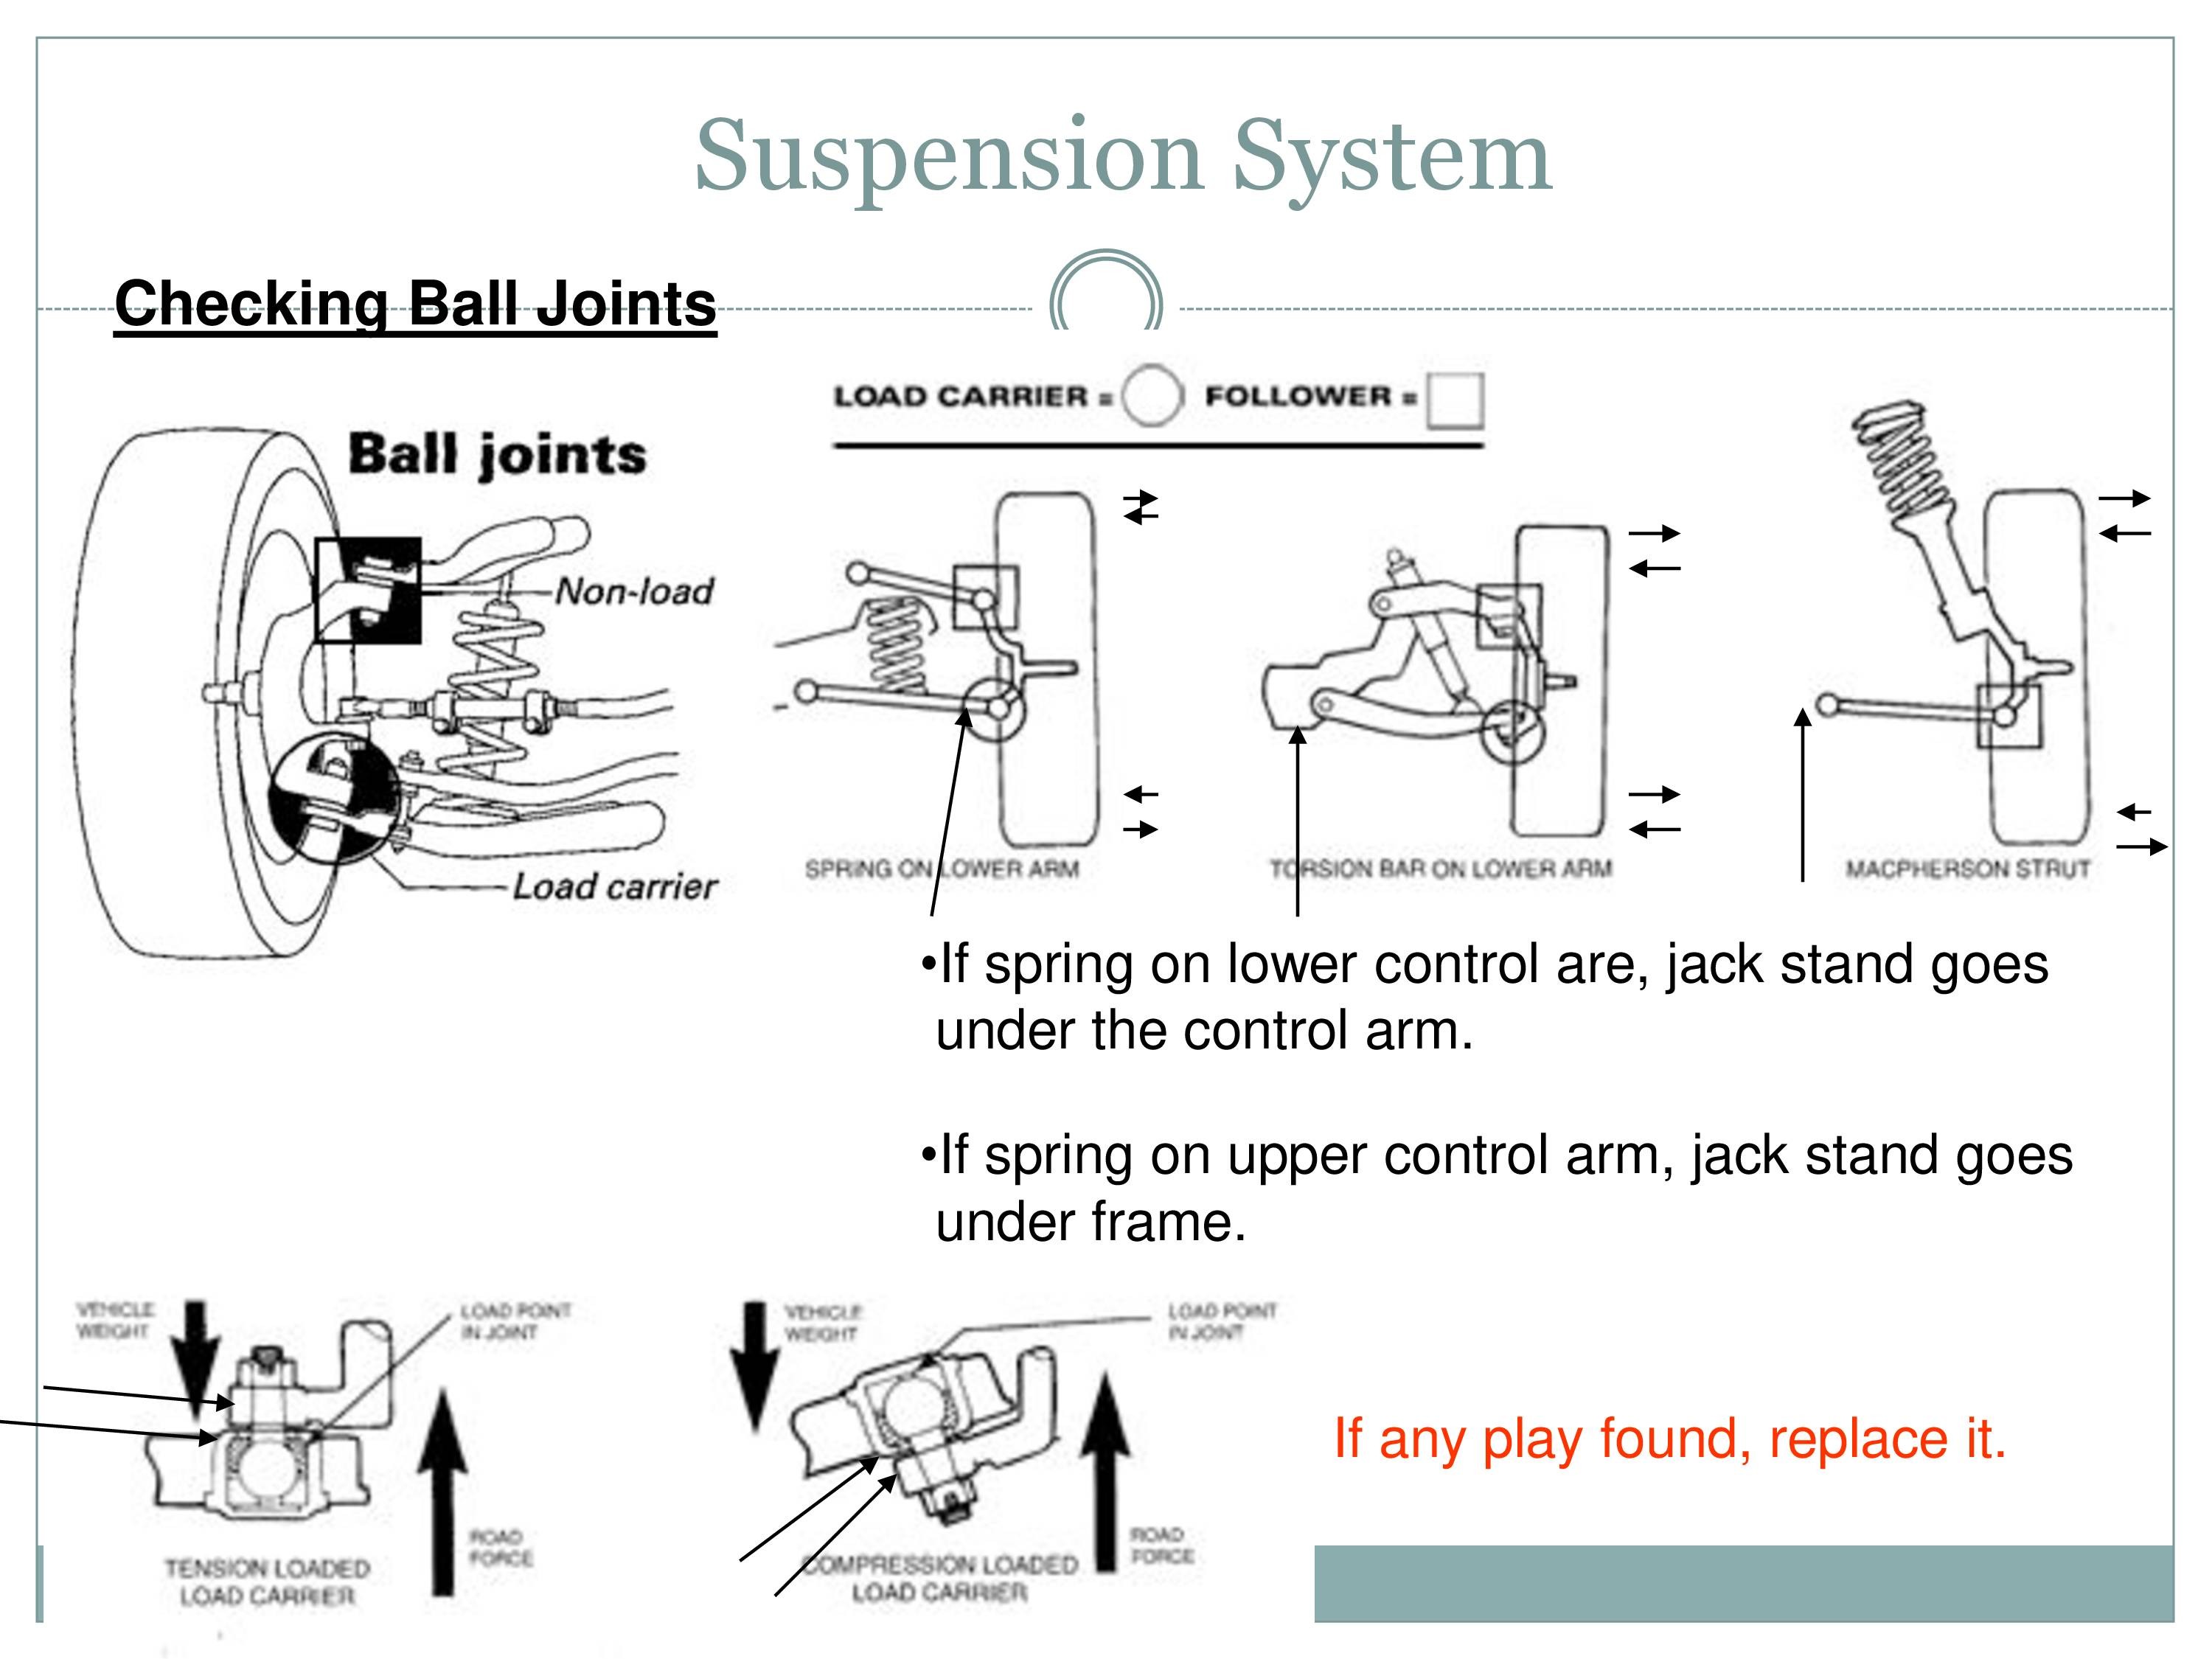 Macpherson Strut Suspension Diagram | My Wiring DIagram